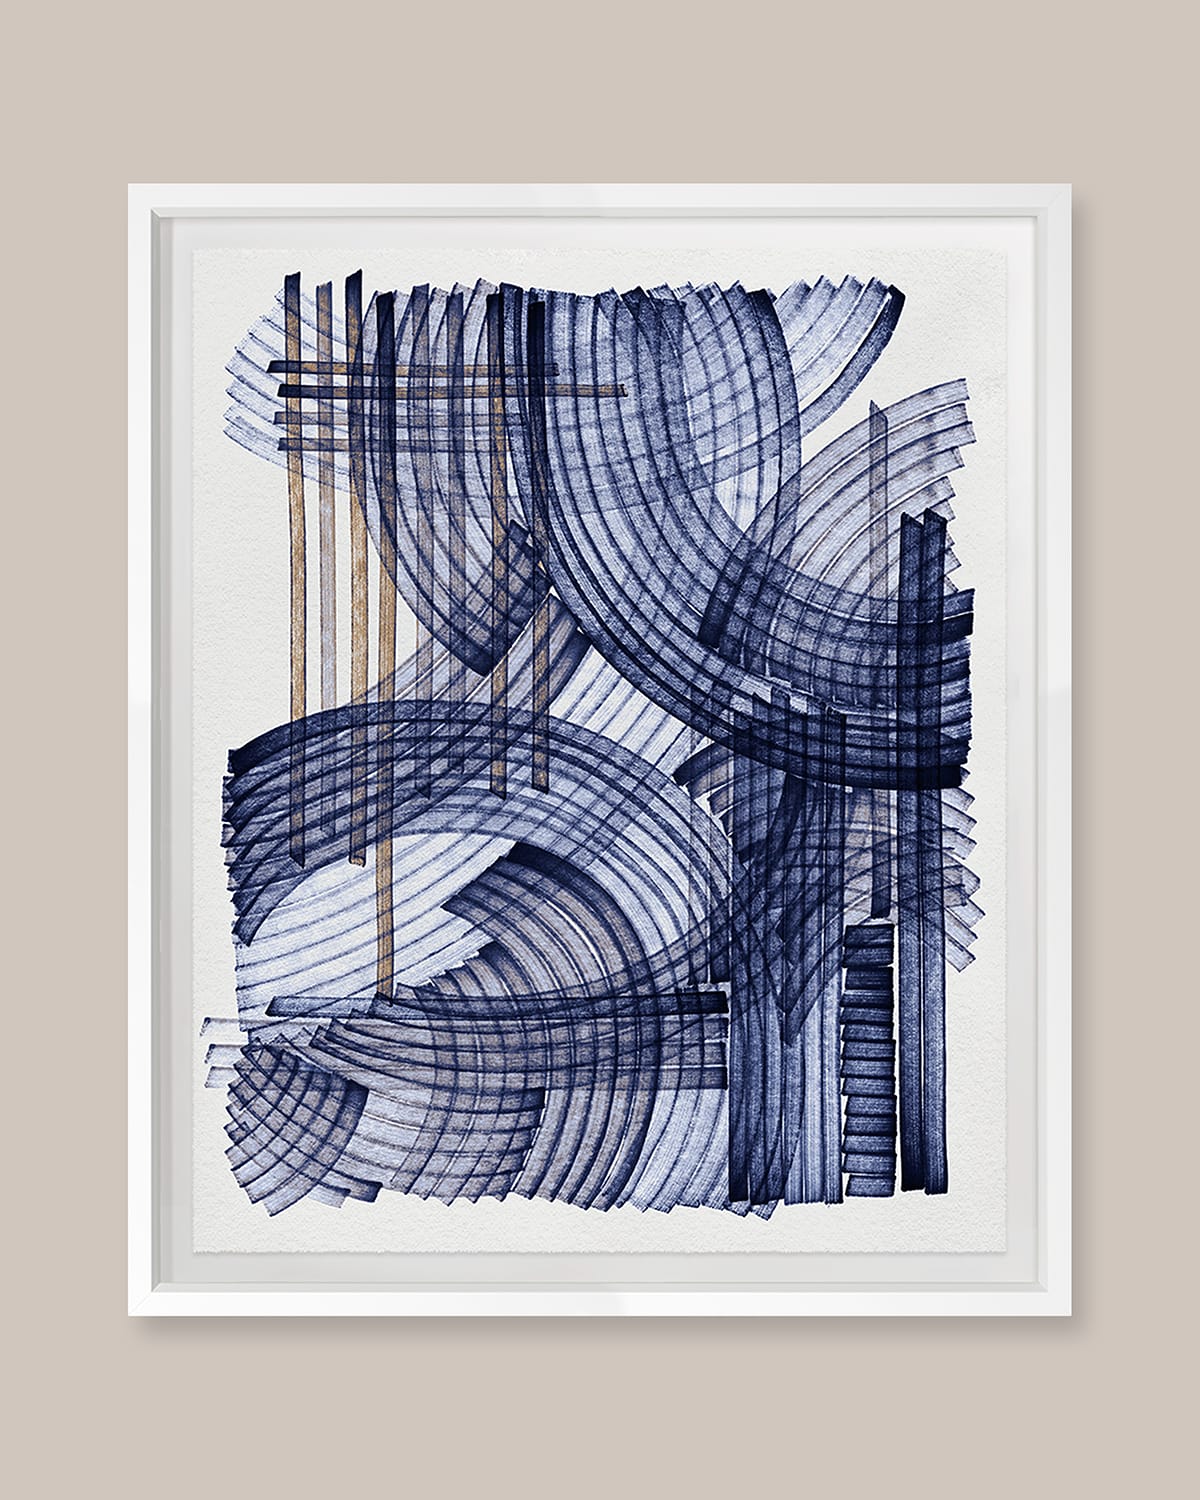 Grand Image Home Blue Weave 2 Digital Art Print By Victoria Neiman In White